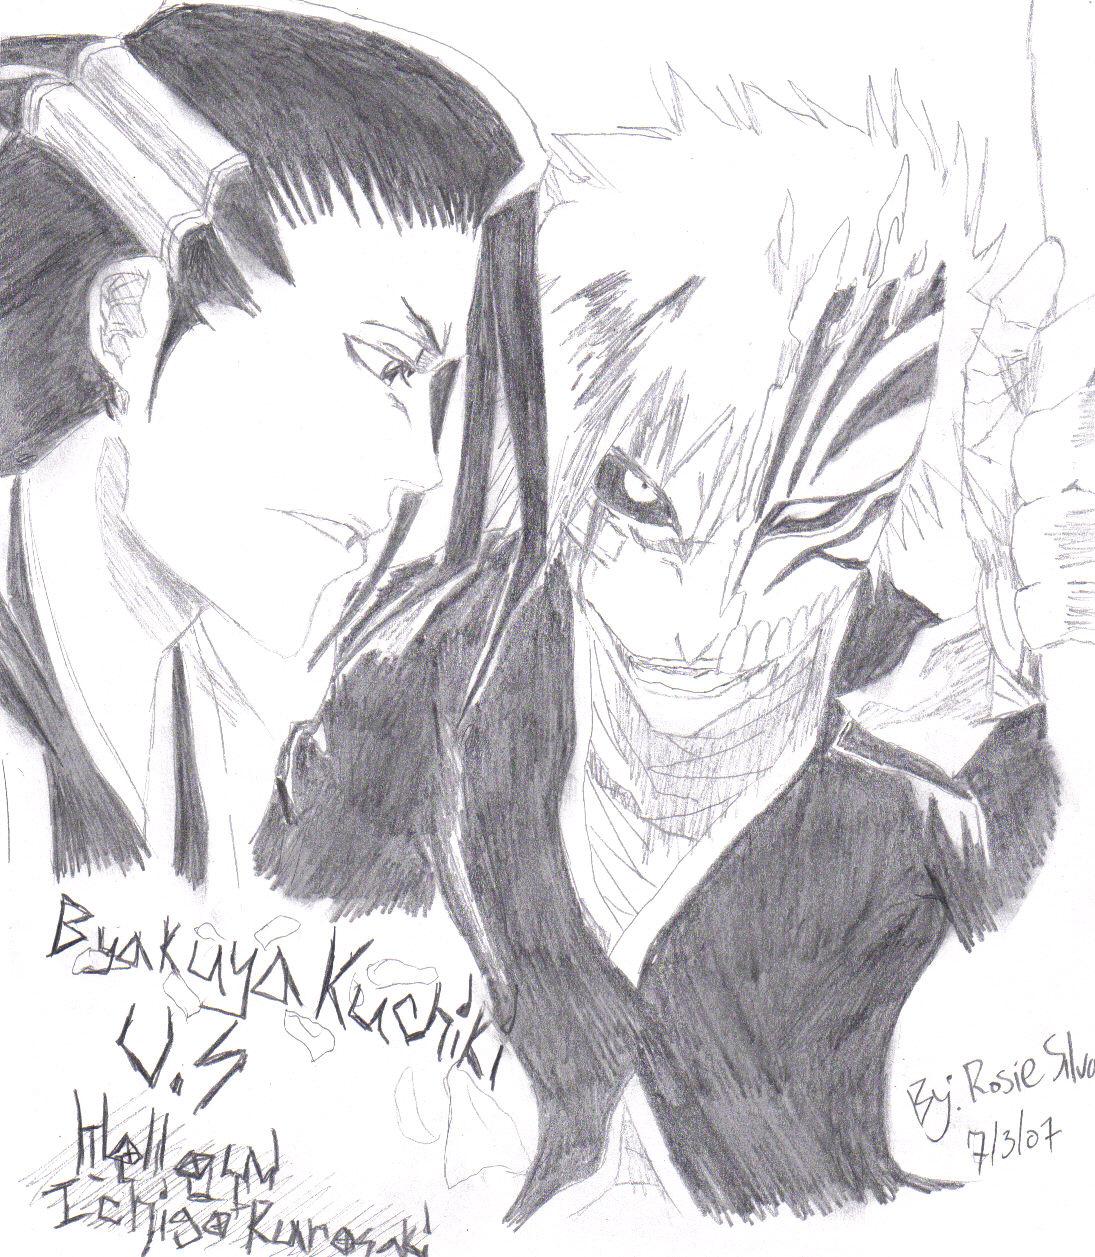 Byakuya vs hollow Ichigo by Blood_ink